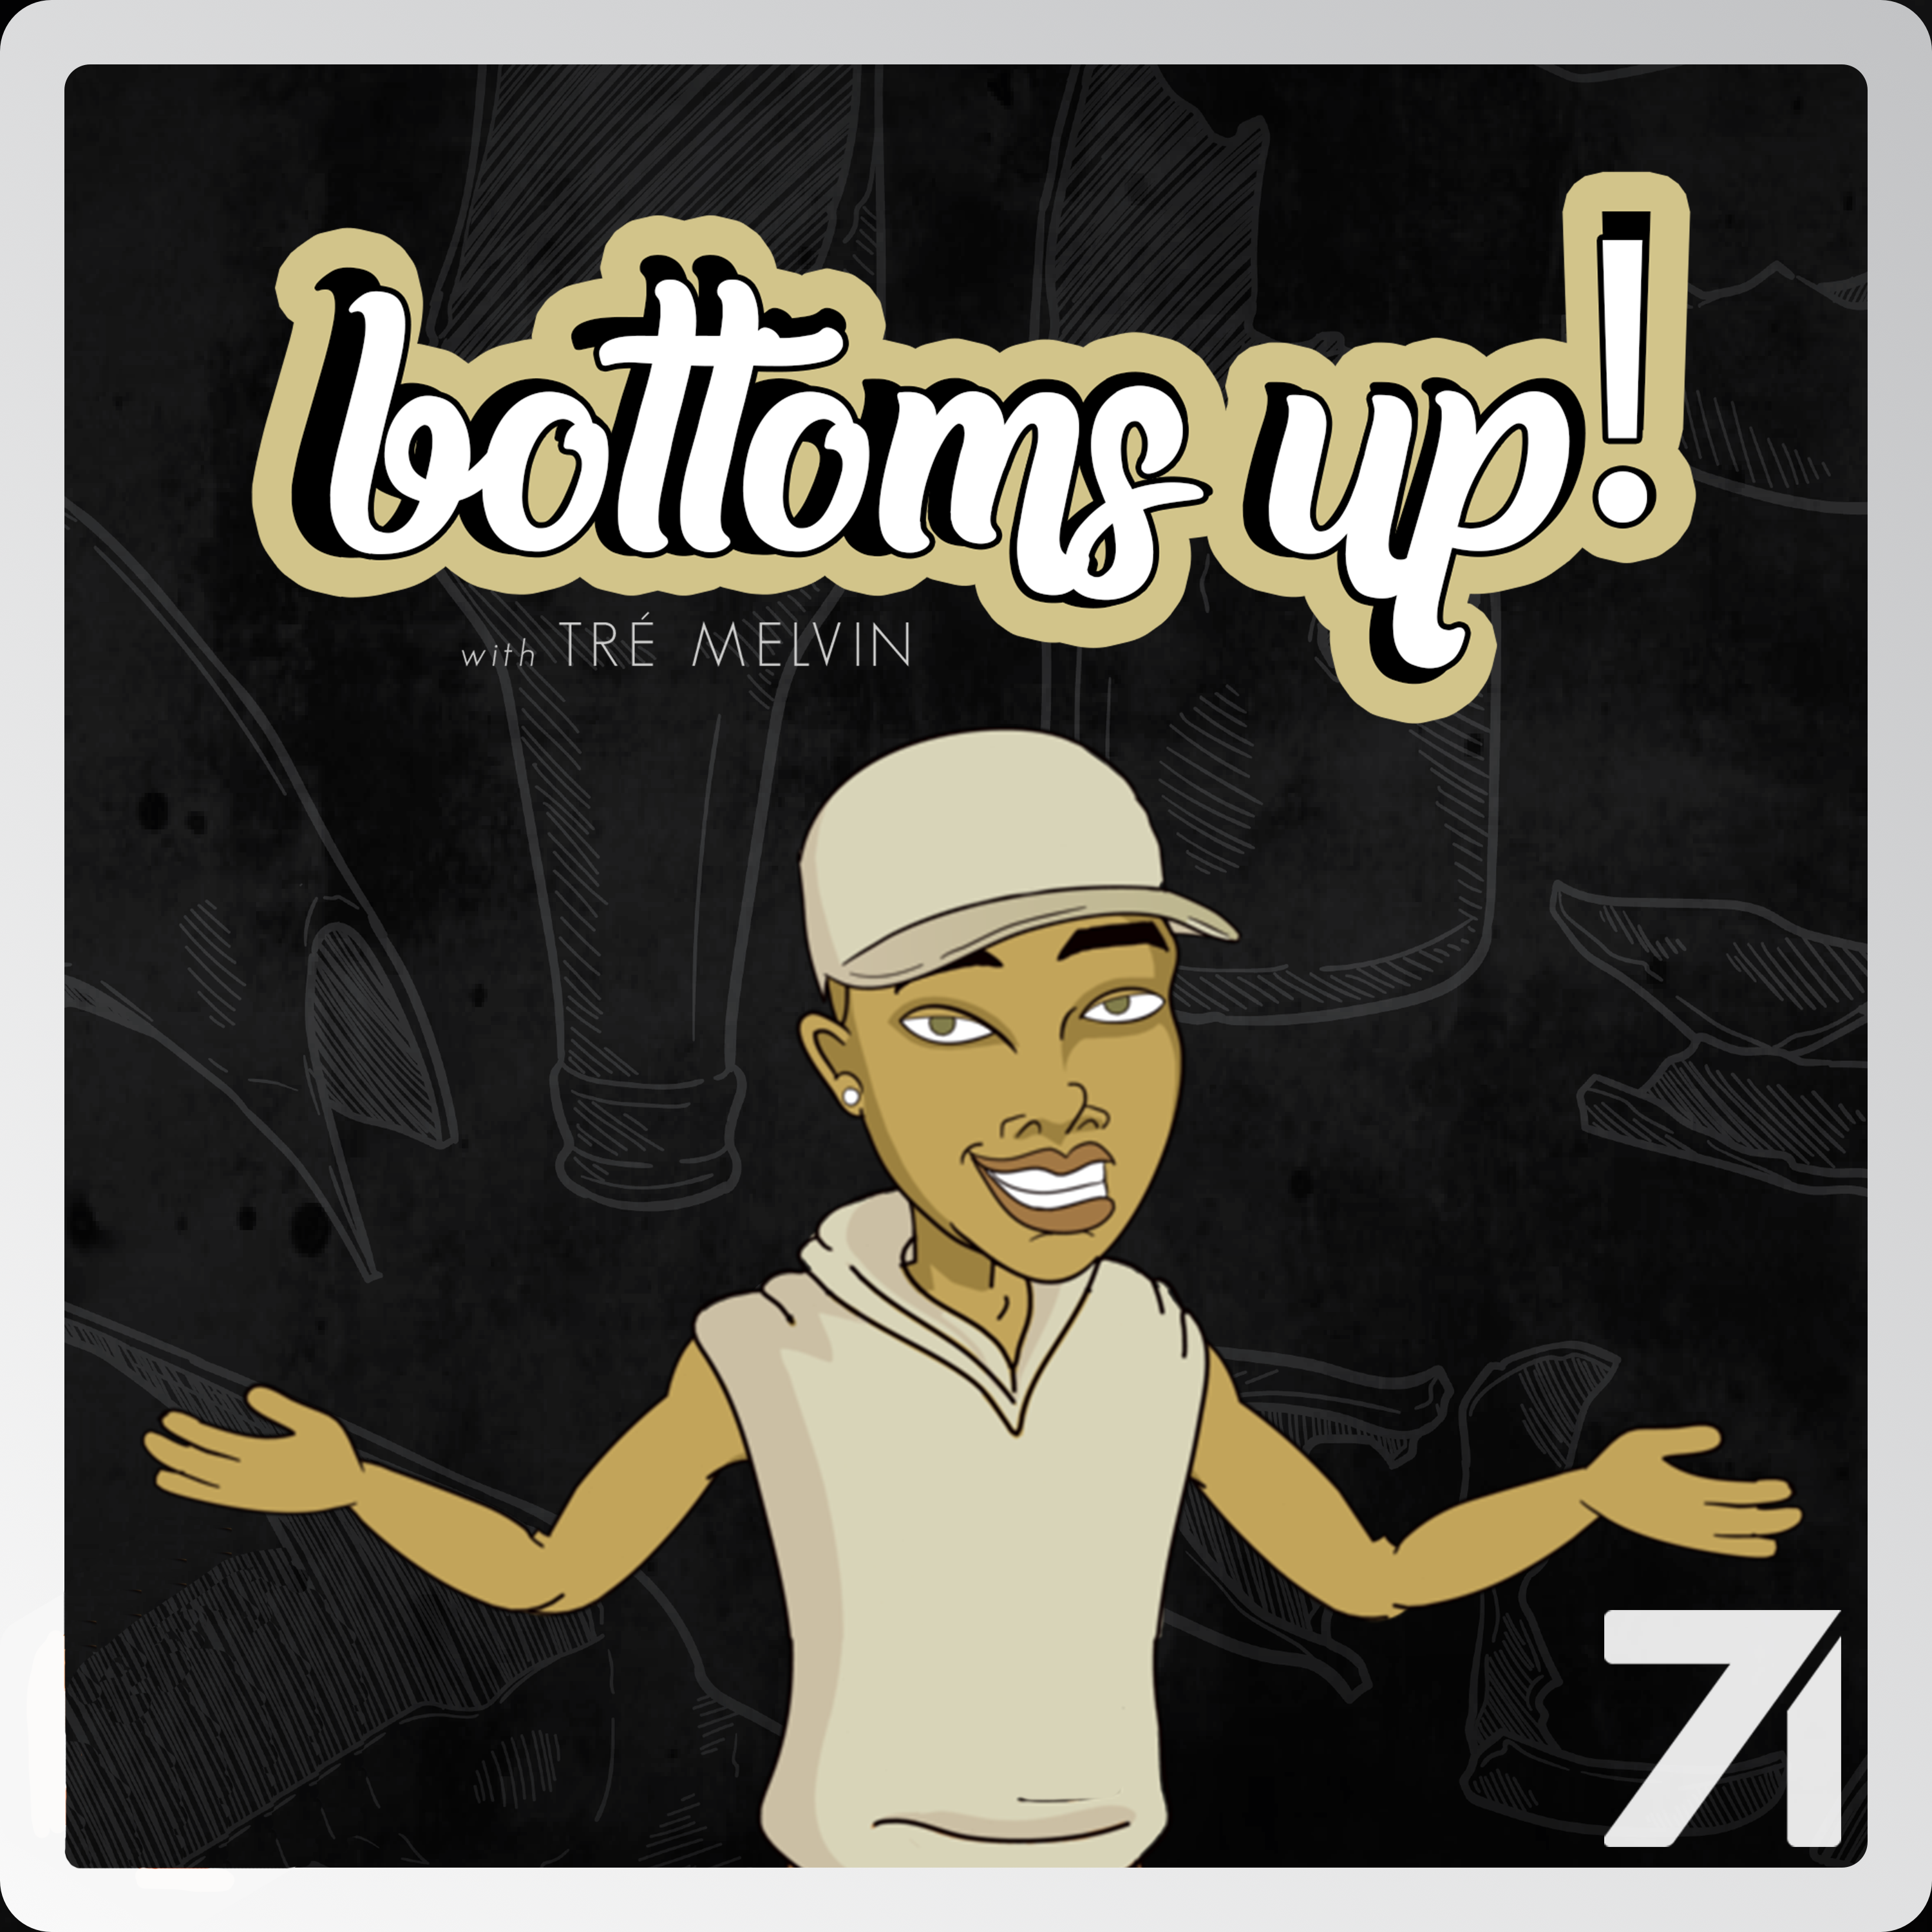 Bottoms Up! With Tré Melvin:Studio71